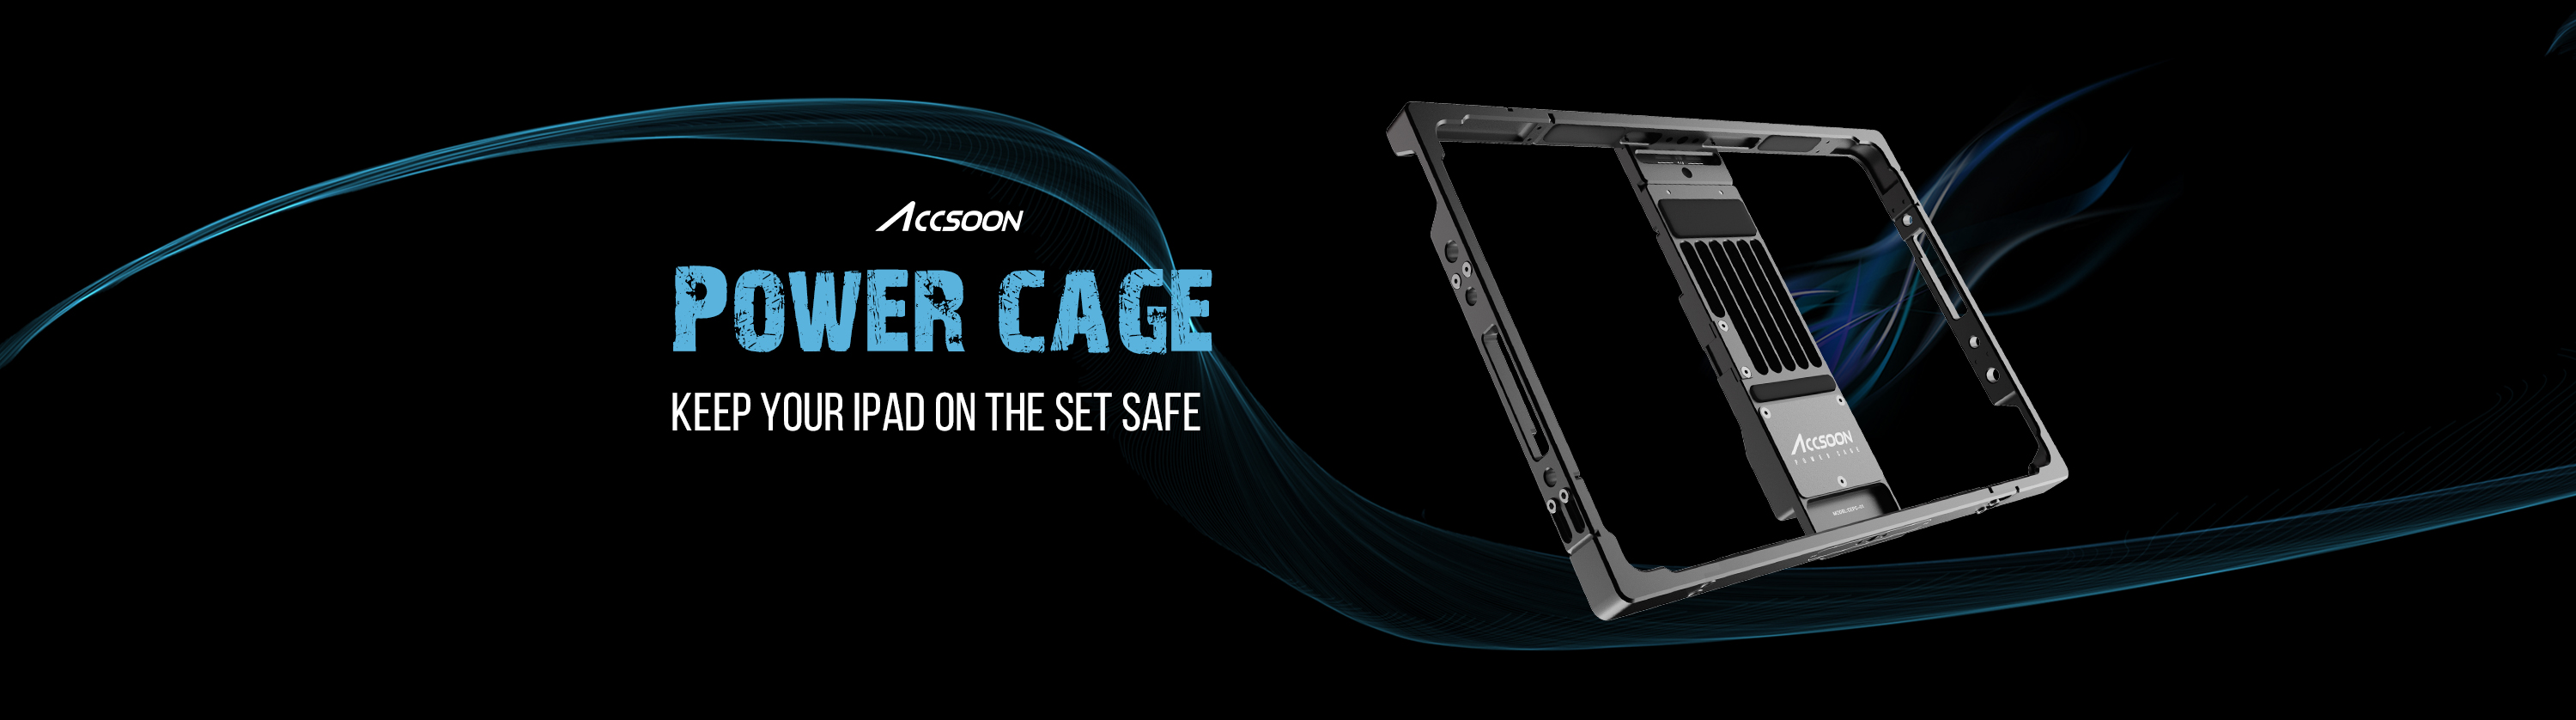 Accsoon iPad Power cage